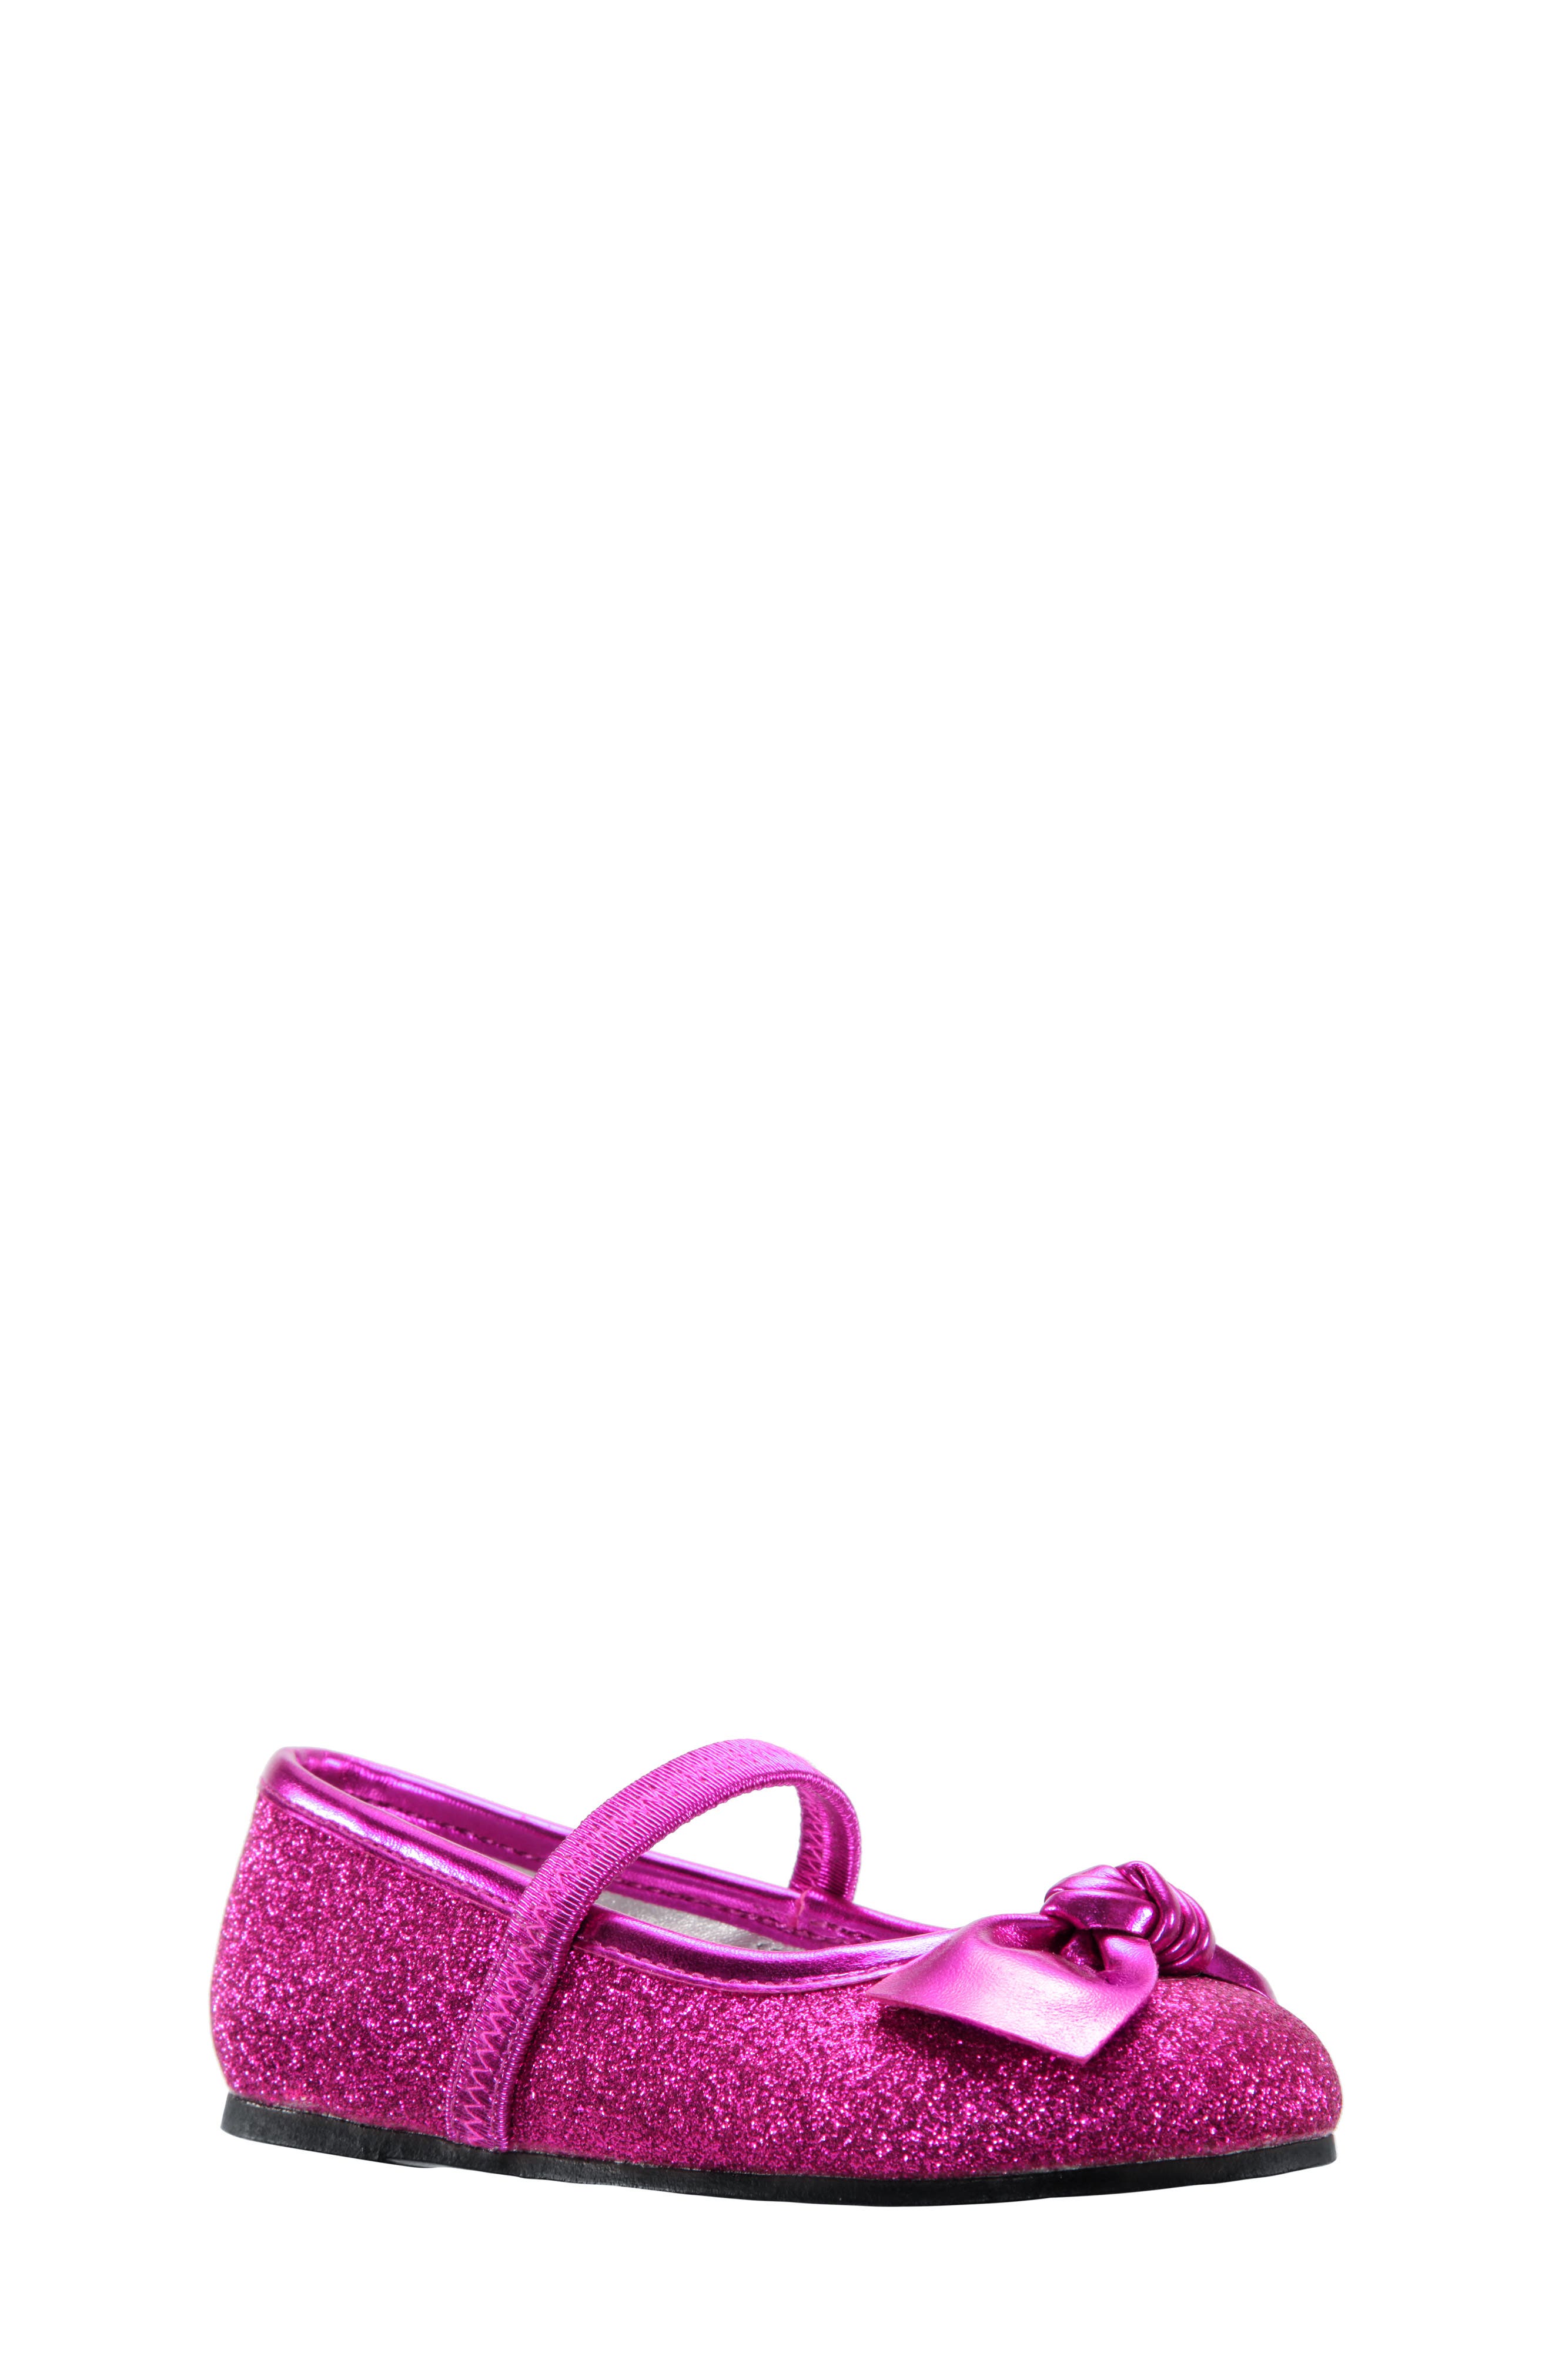 UPC 794378369134 product image for Toddler Girl's Nina Larabeth-T Glitter Bow Ballet Flat, Size 7 M - Pink | upcitemdb.com